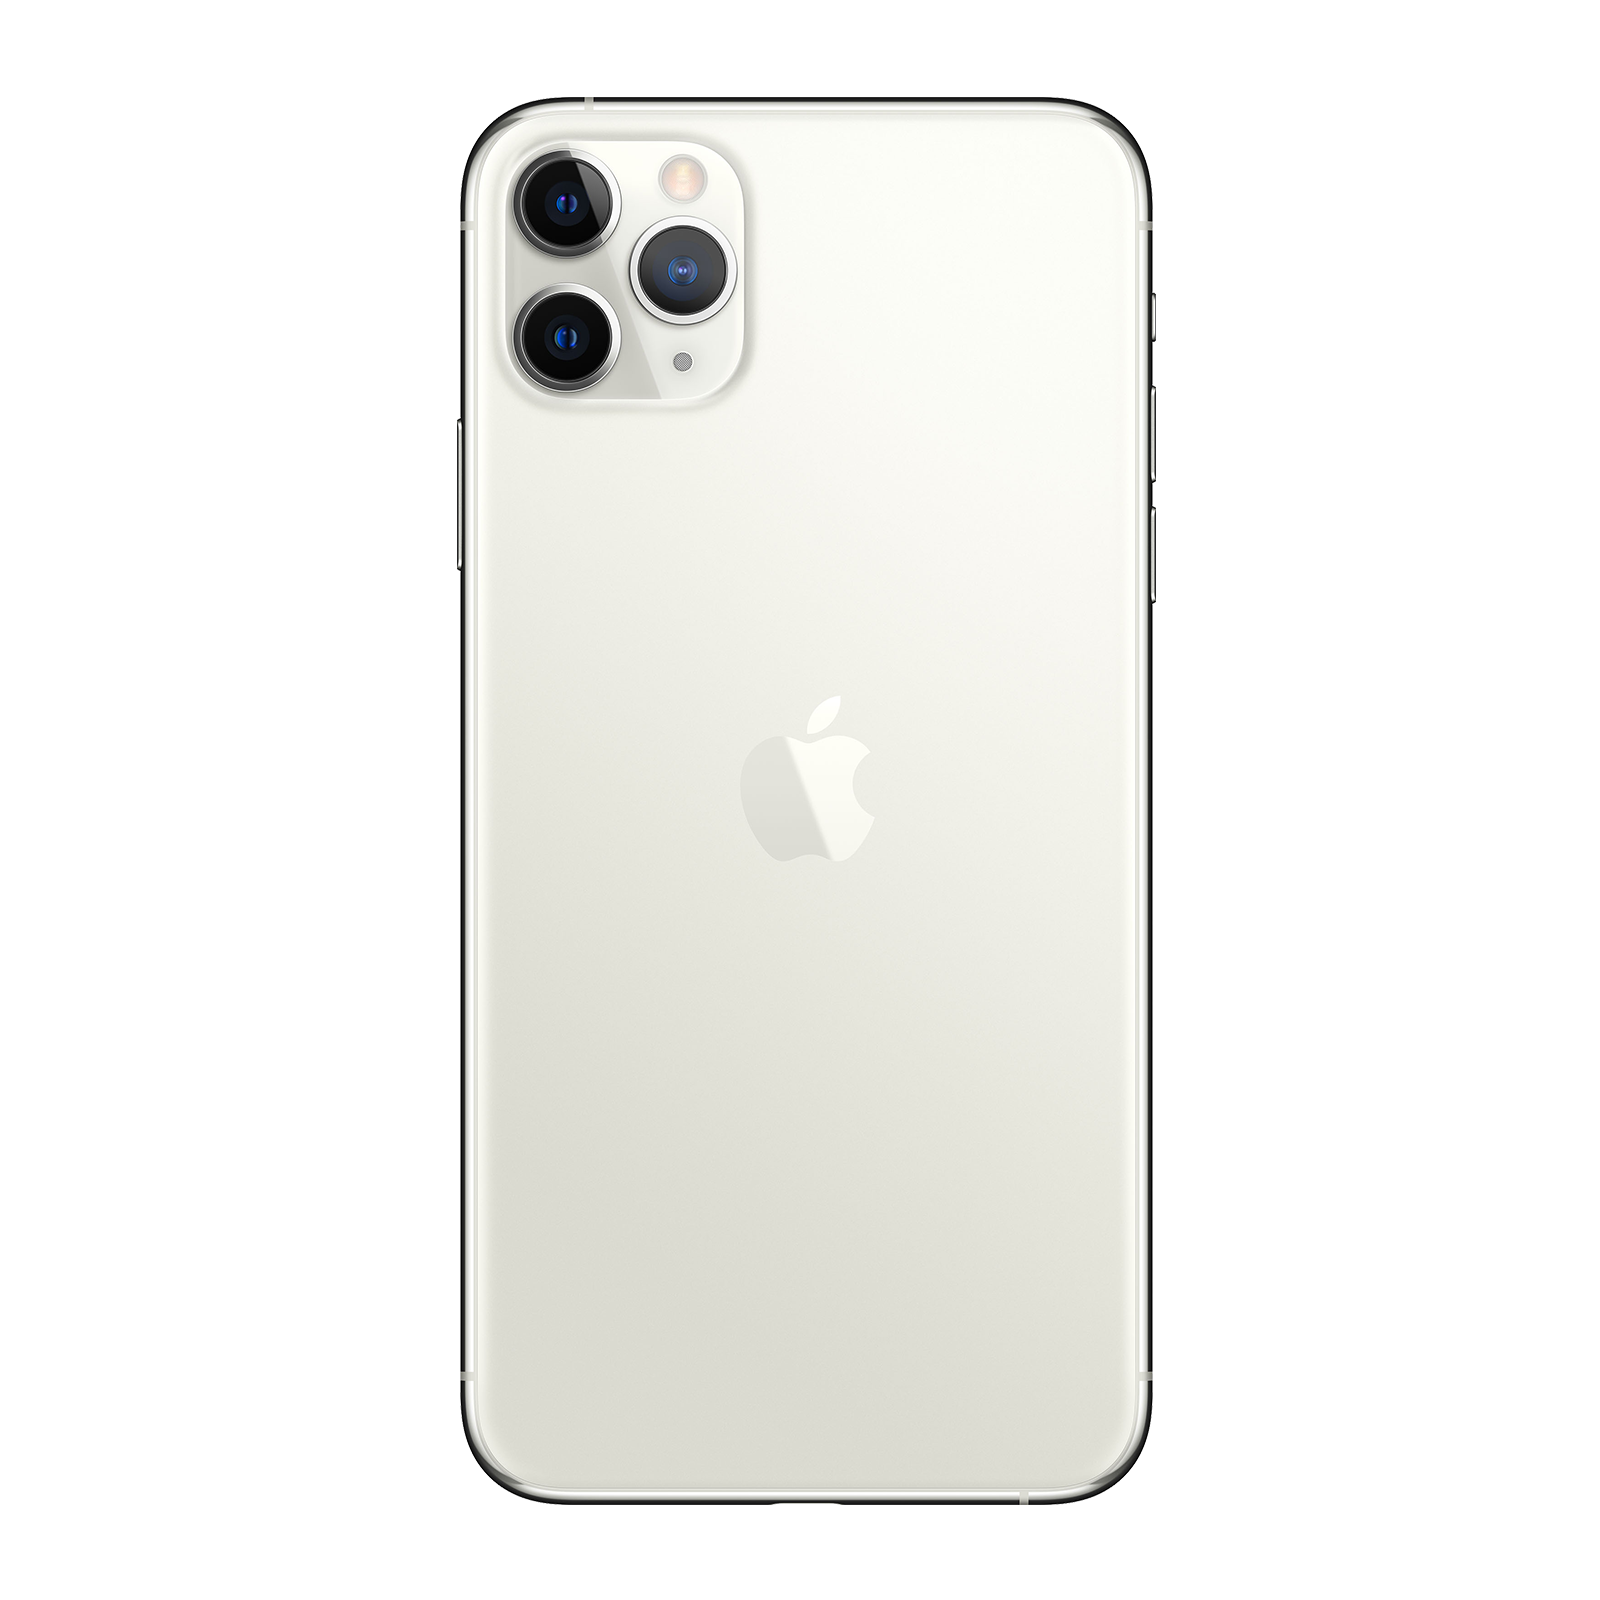 iPhone 11 Pro 512GB Silver Pristine Unlocked - New Battery